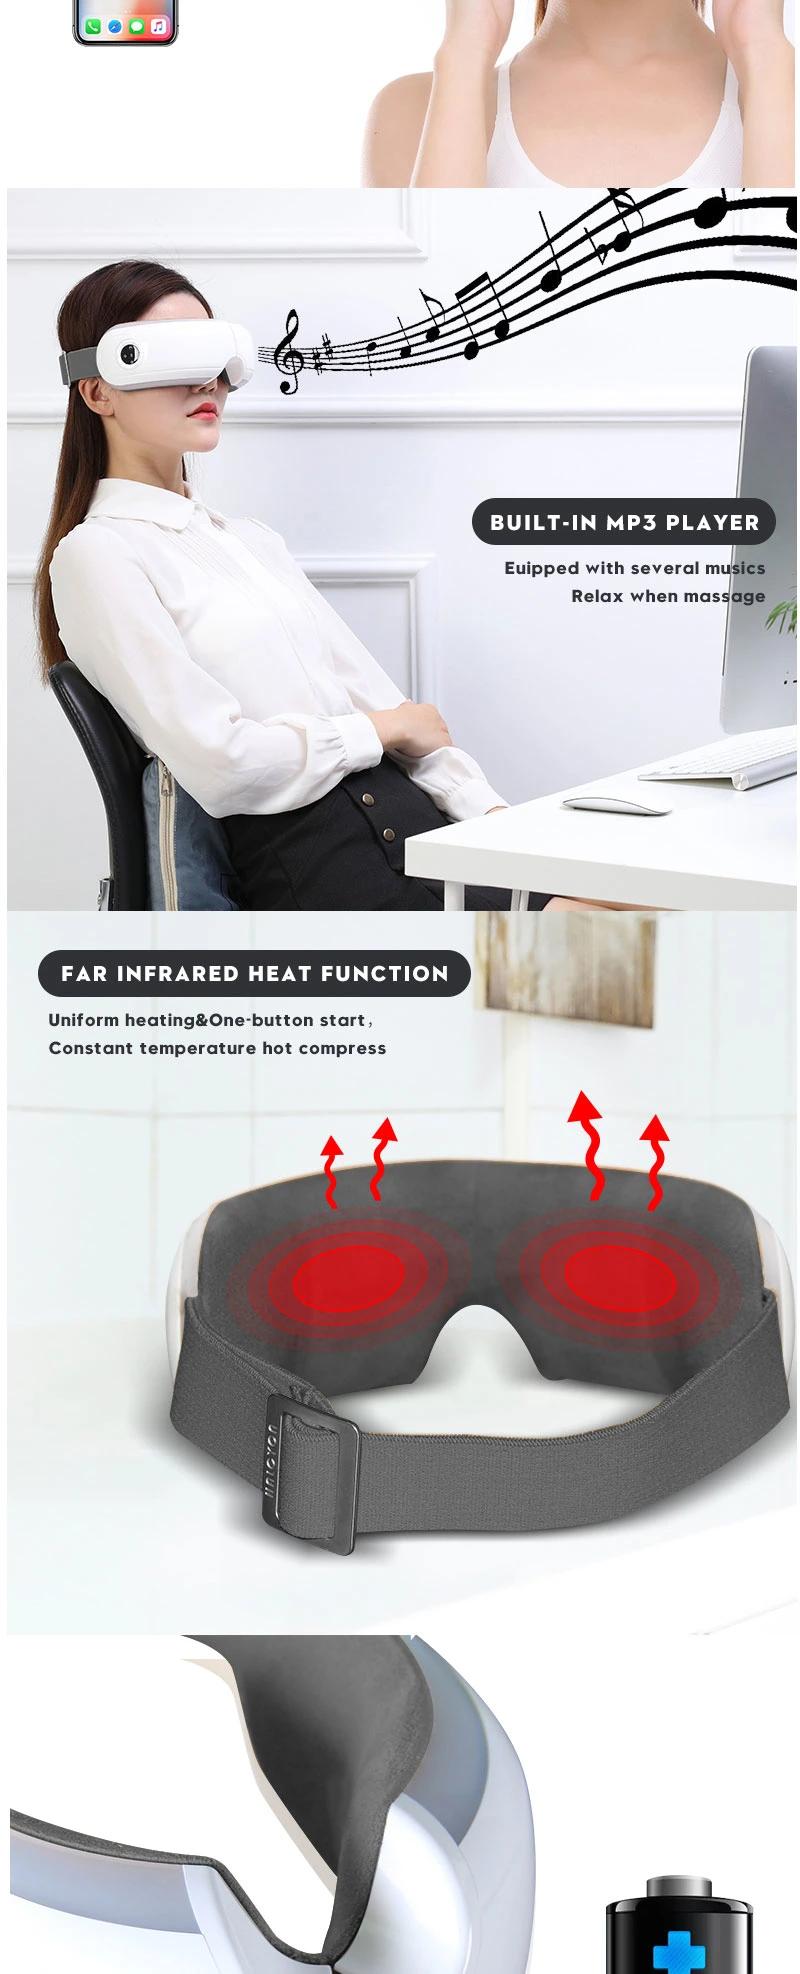 Hezheng Bluetooth Eye Care Massager Vibration Electric Music Collapsibl Heating Instrument Eyes Massager